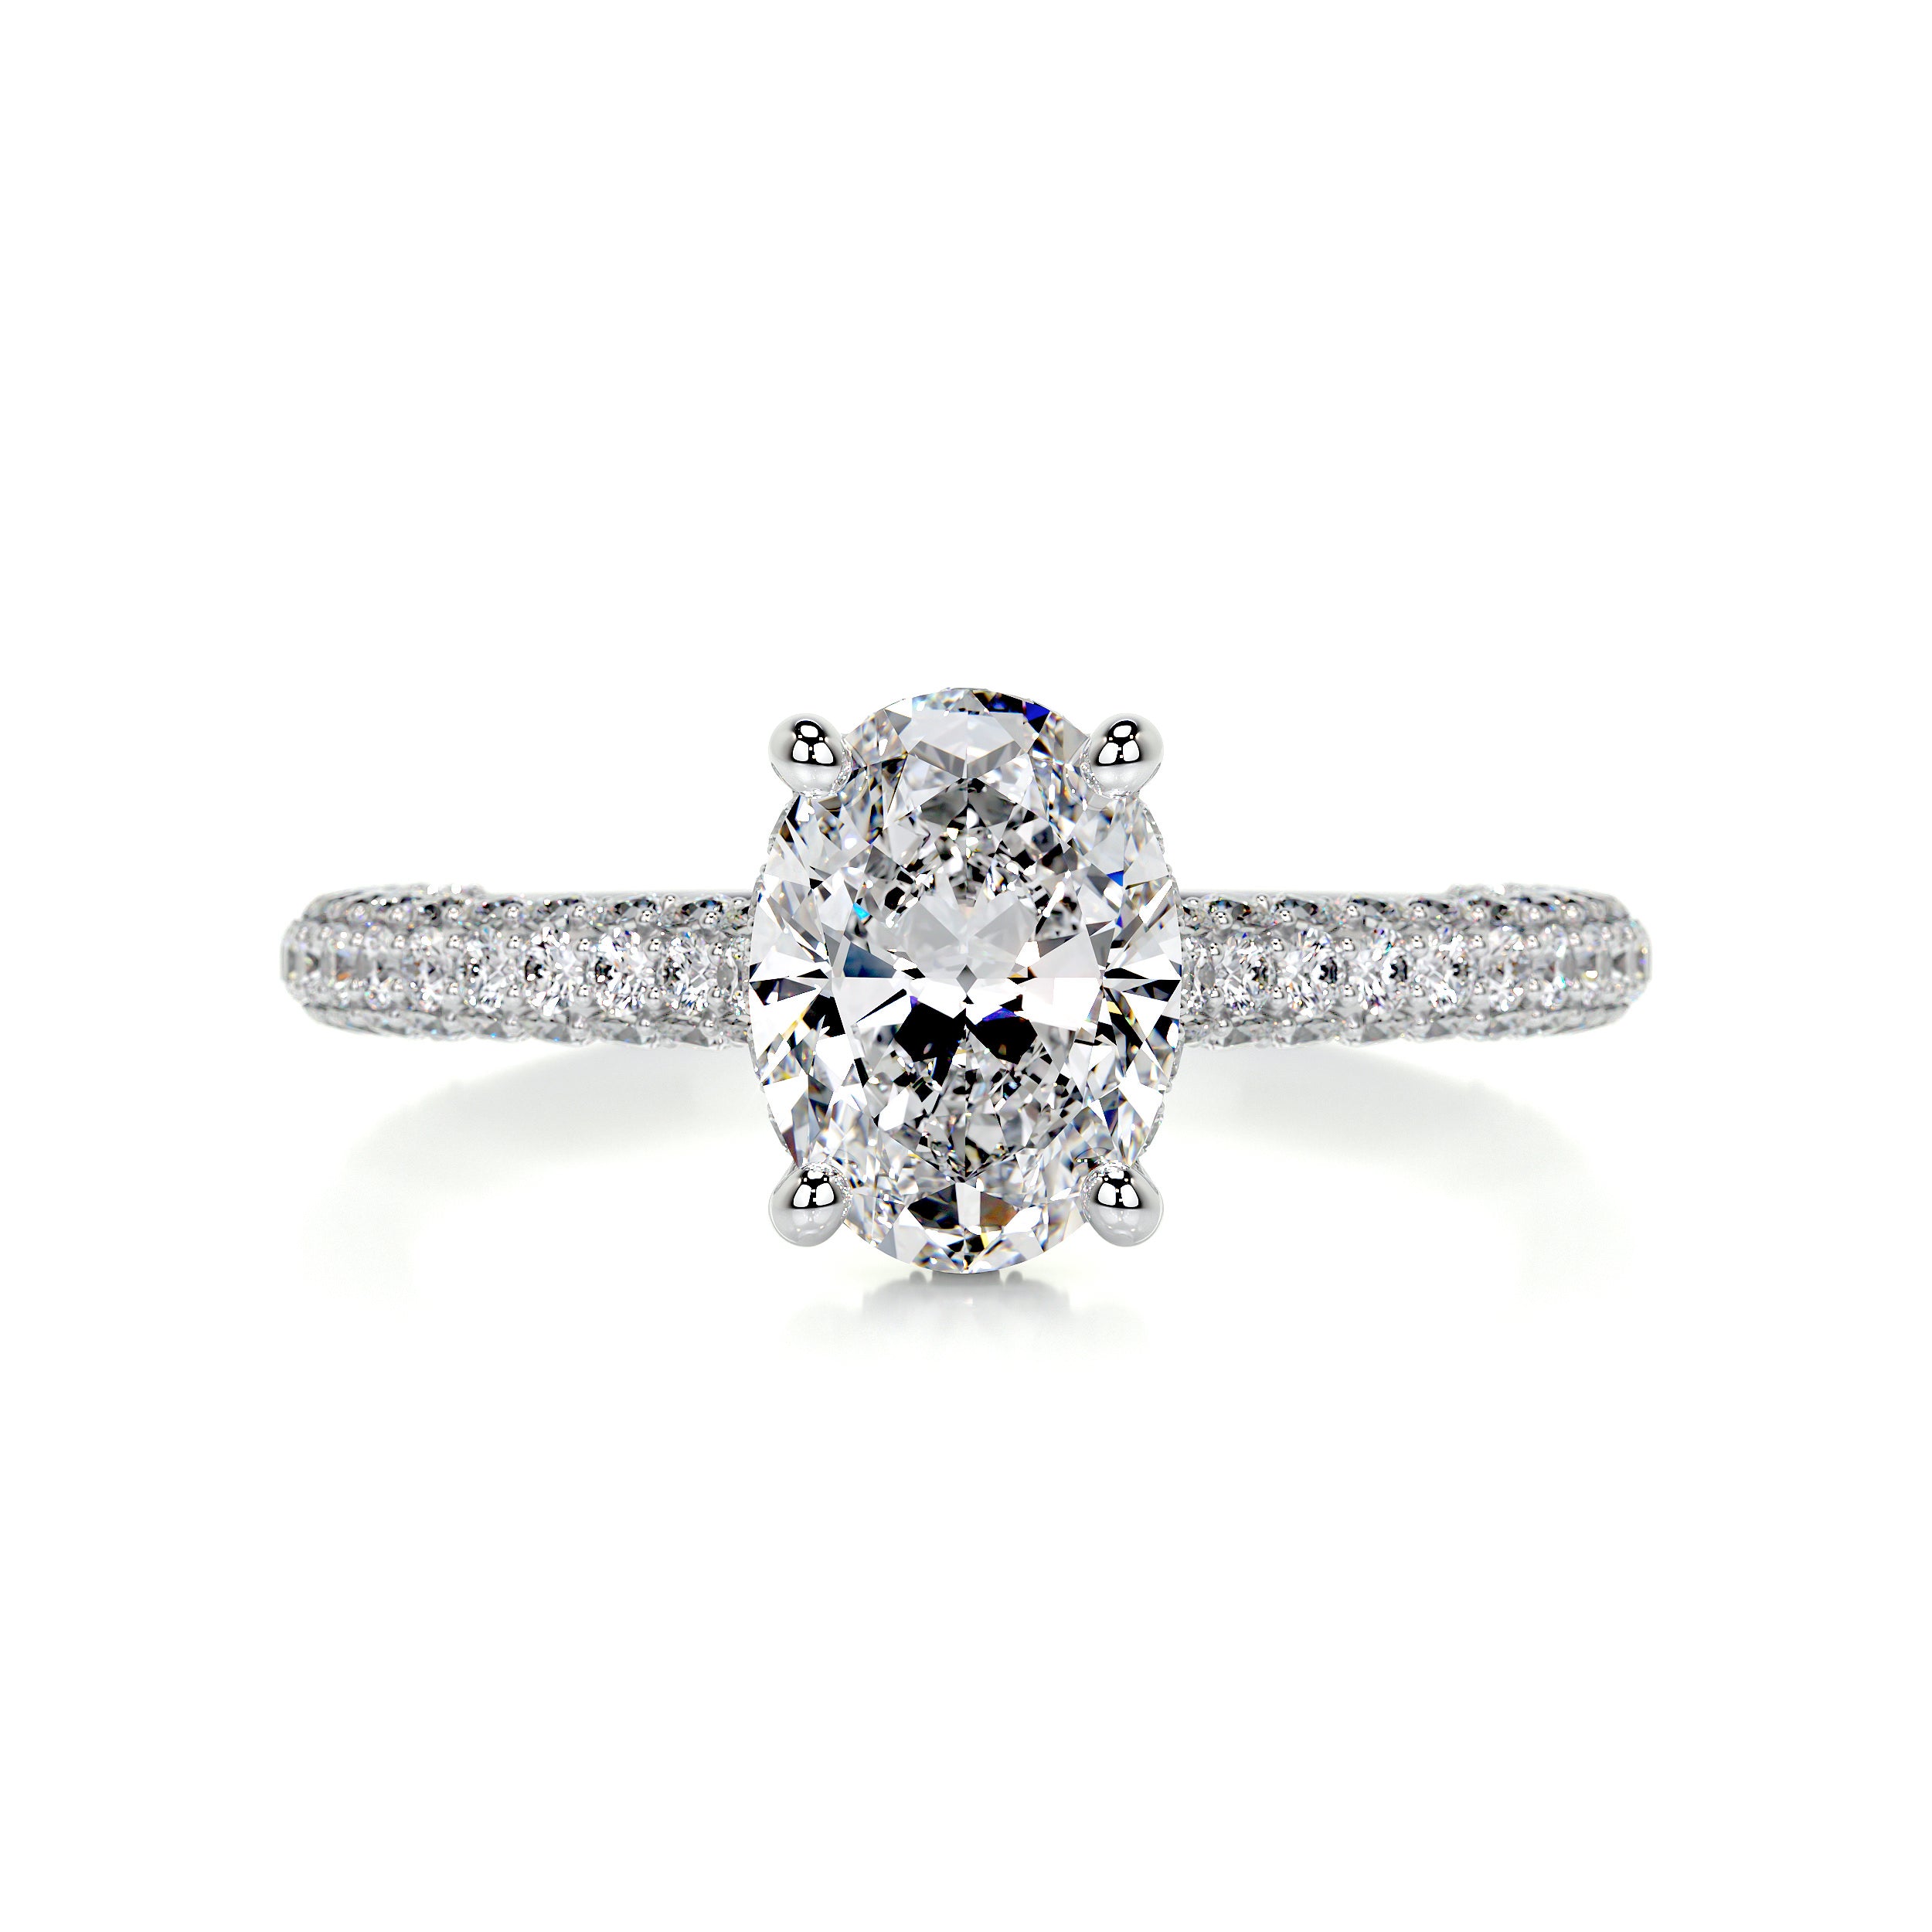 Rebecca Diamond Engagement Ring   (2.5 Carat) -14K White Gold